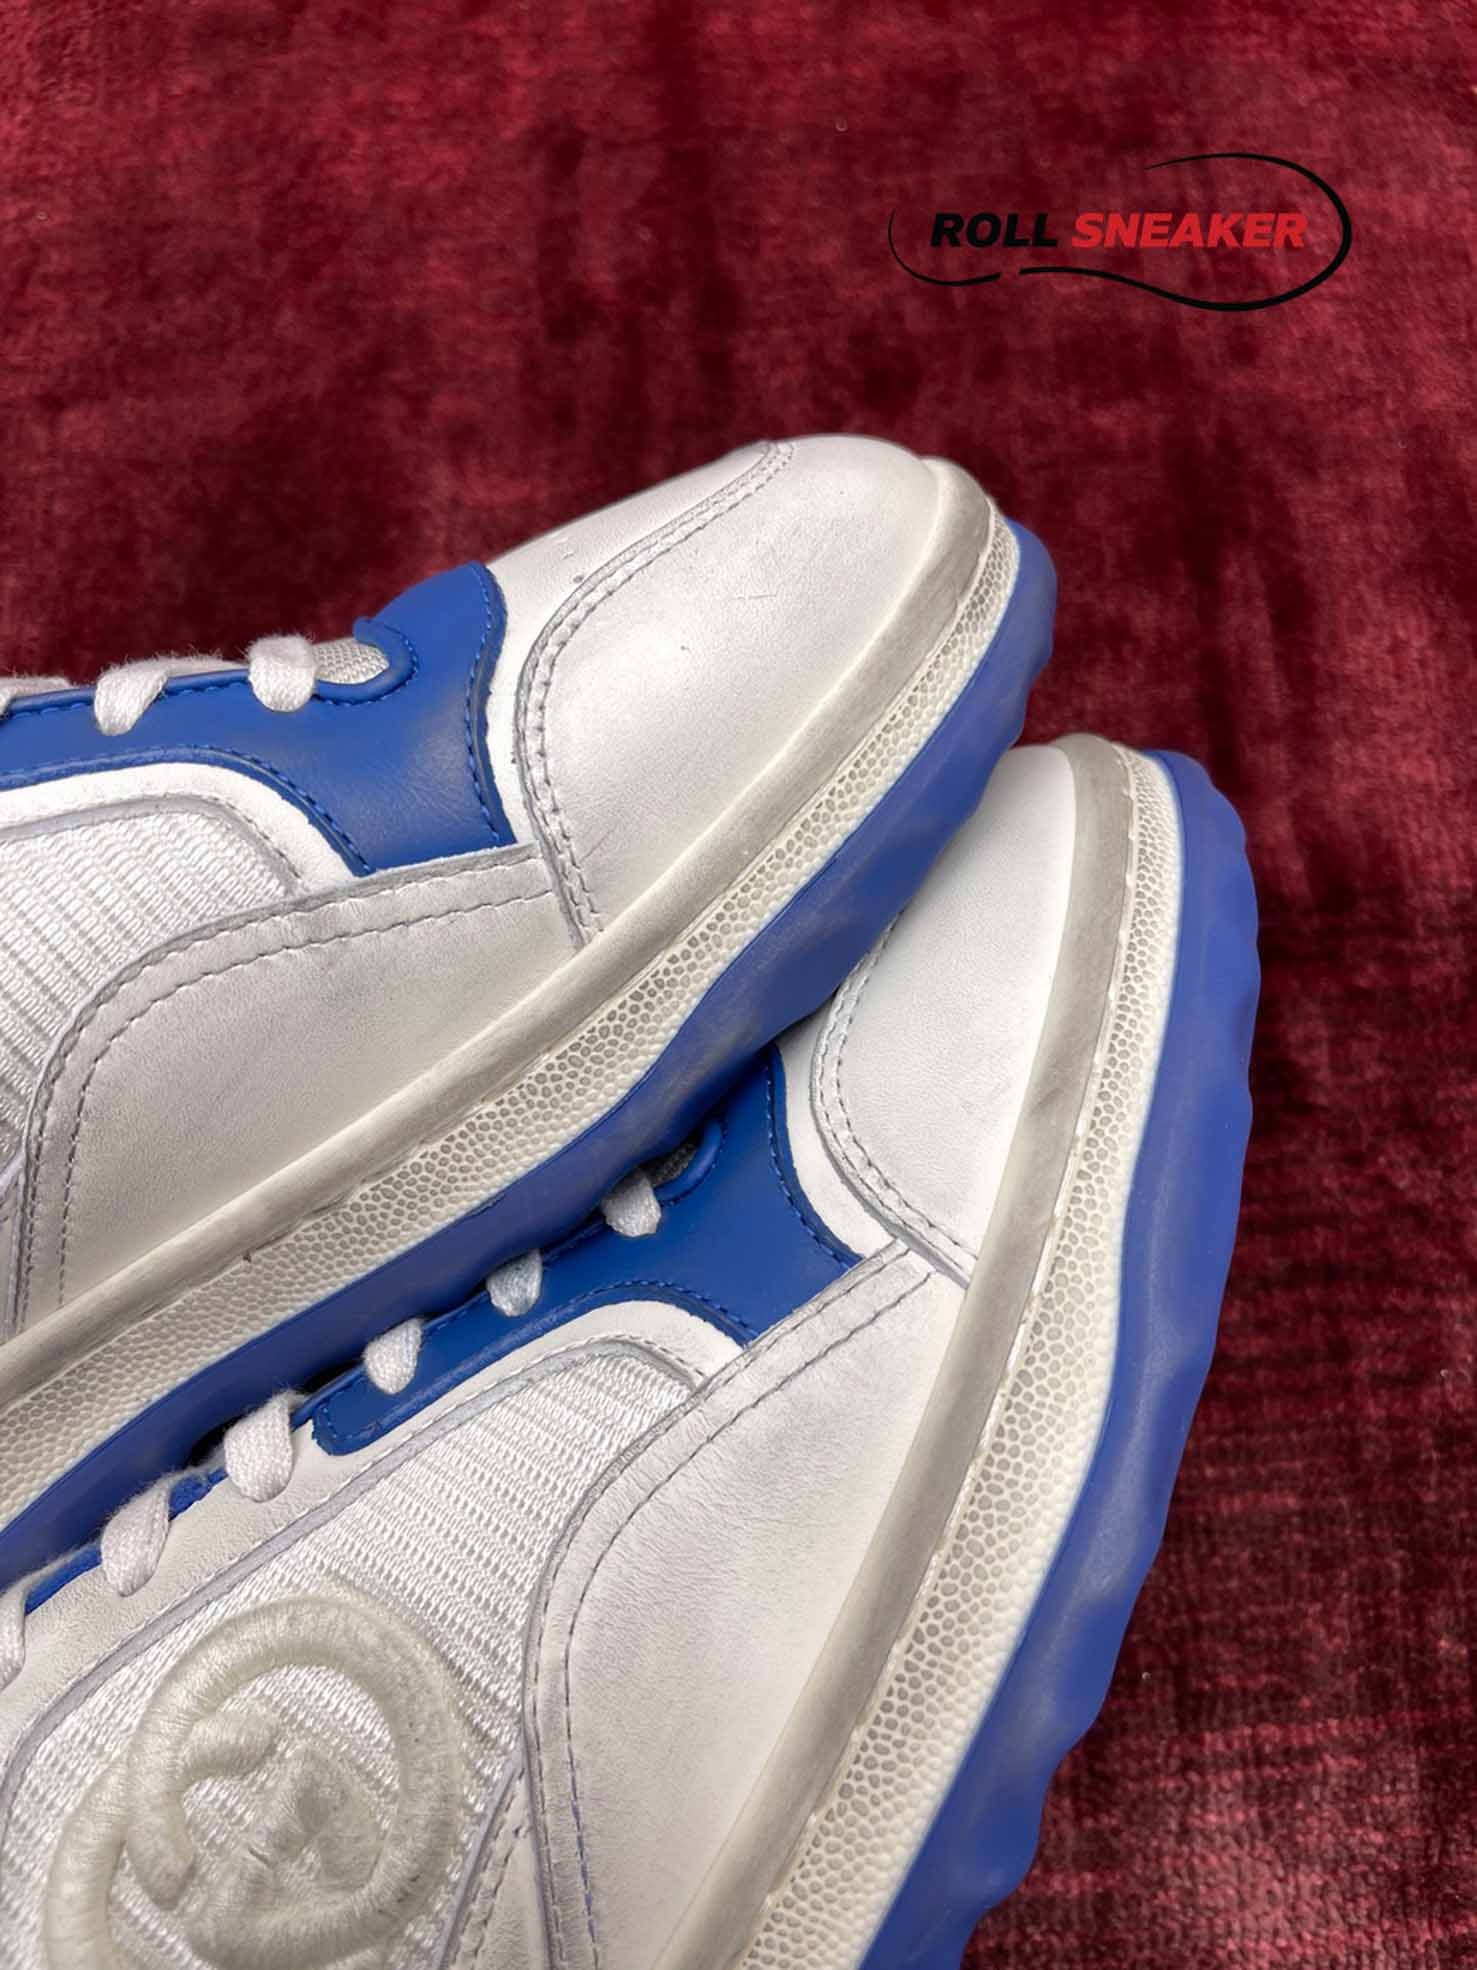 Gucci MAC80 Sneaker White and Blue
